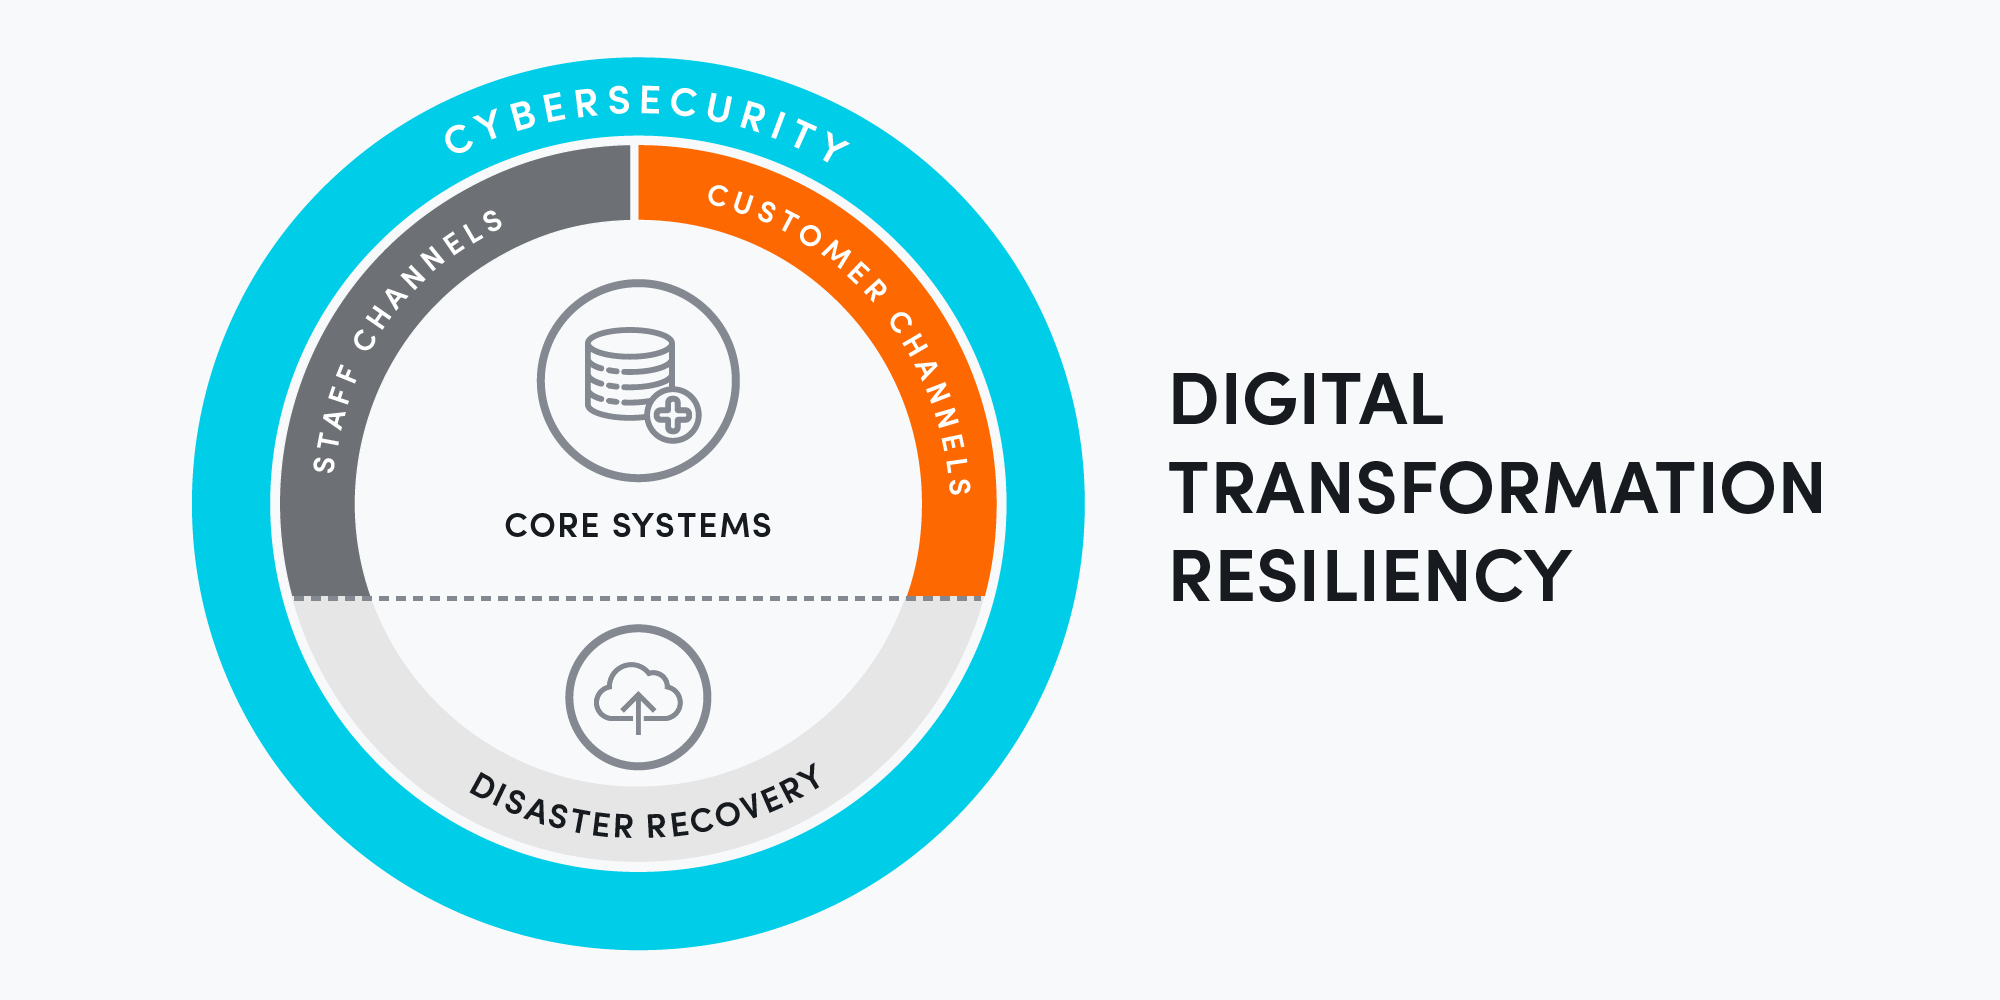 Digital transformation resiliency